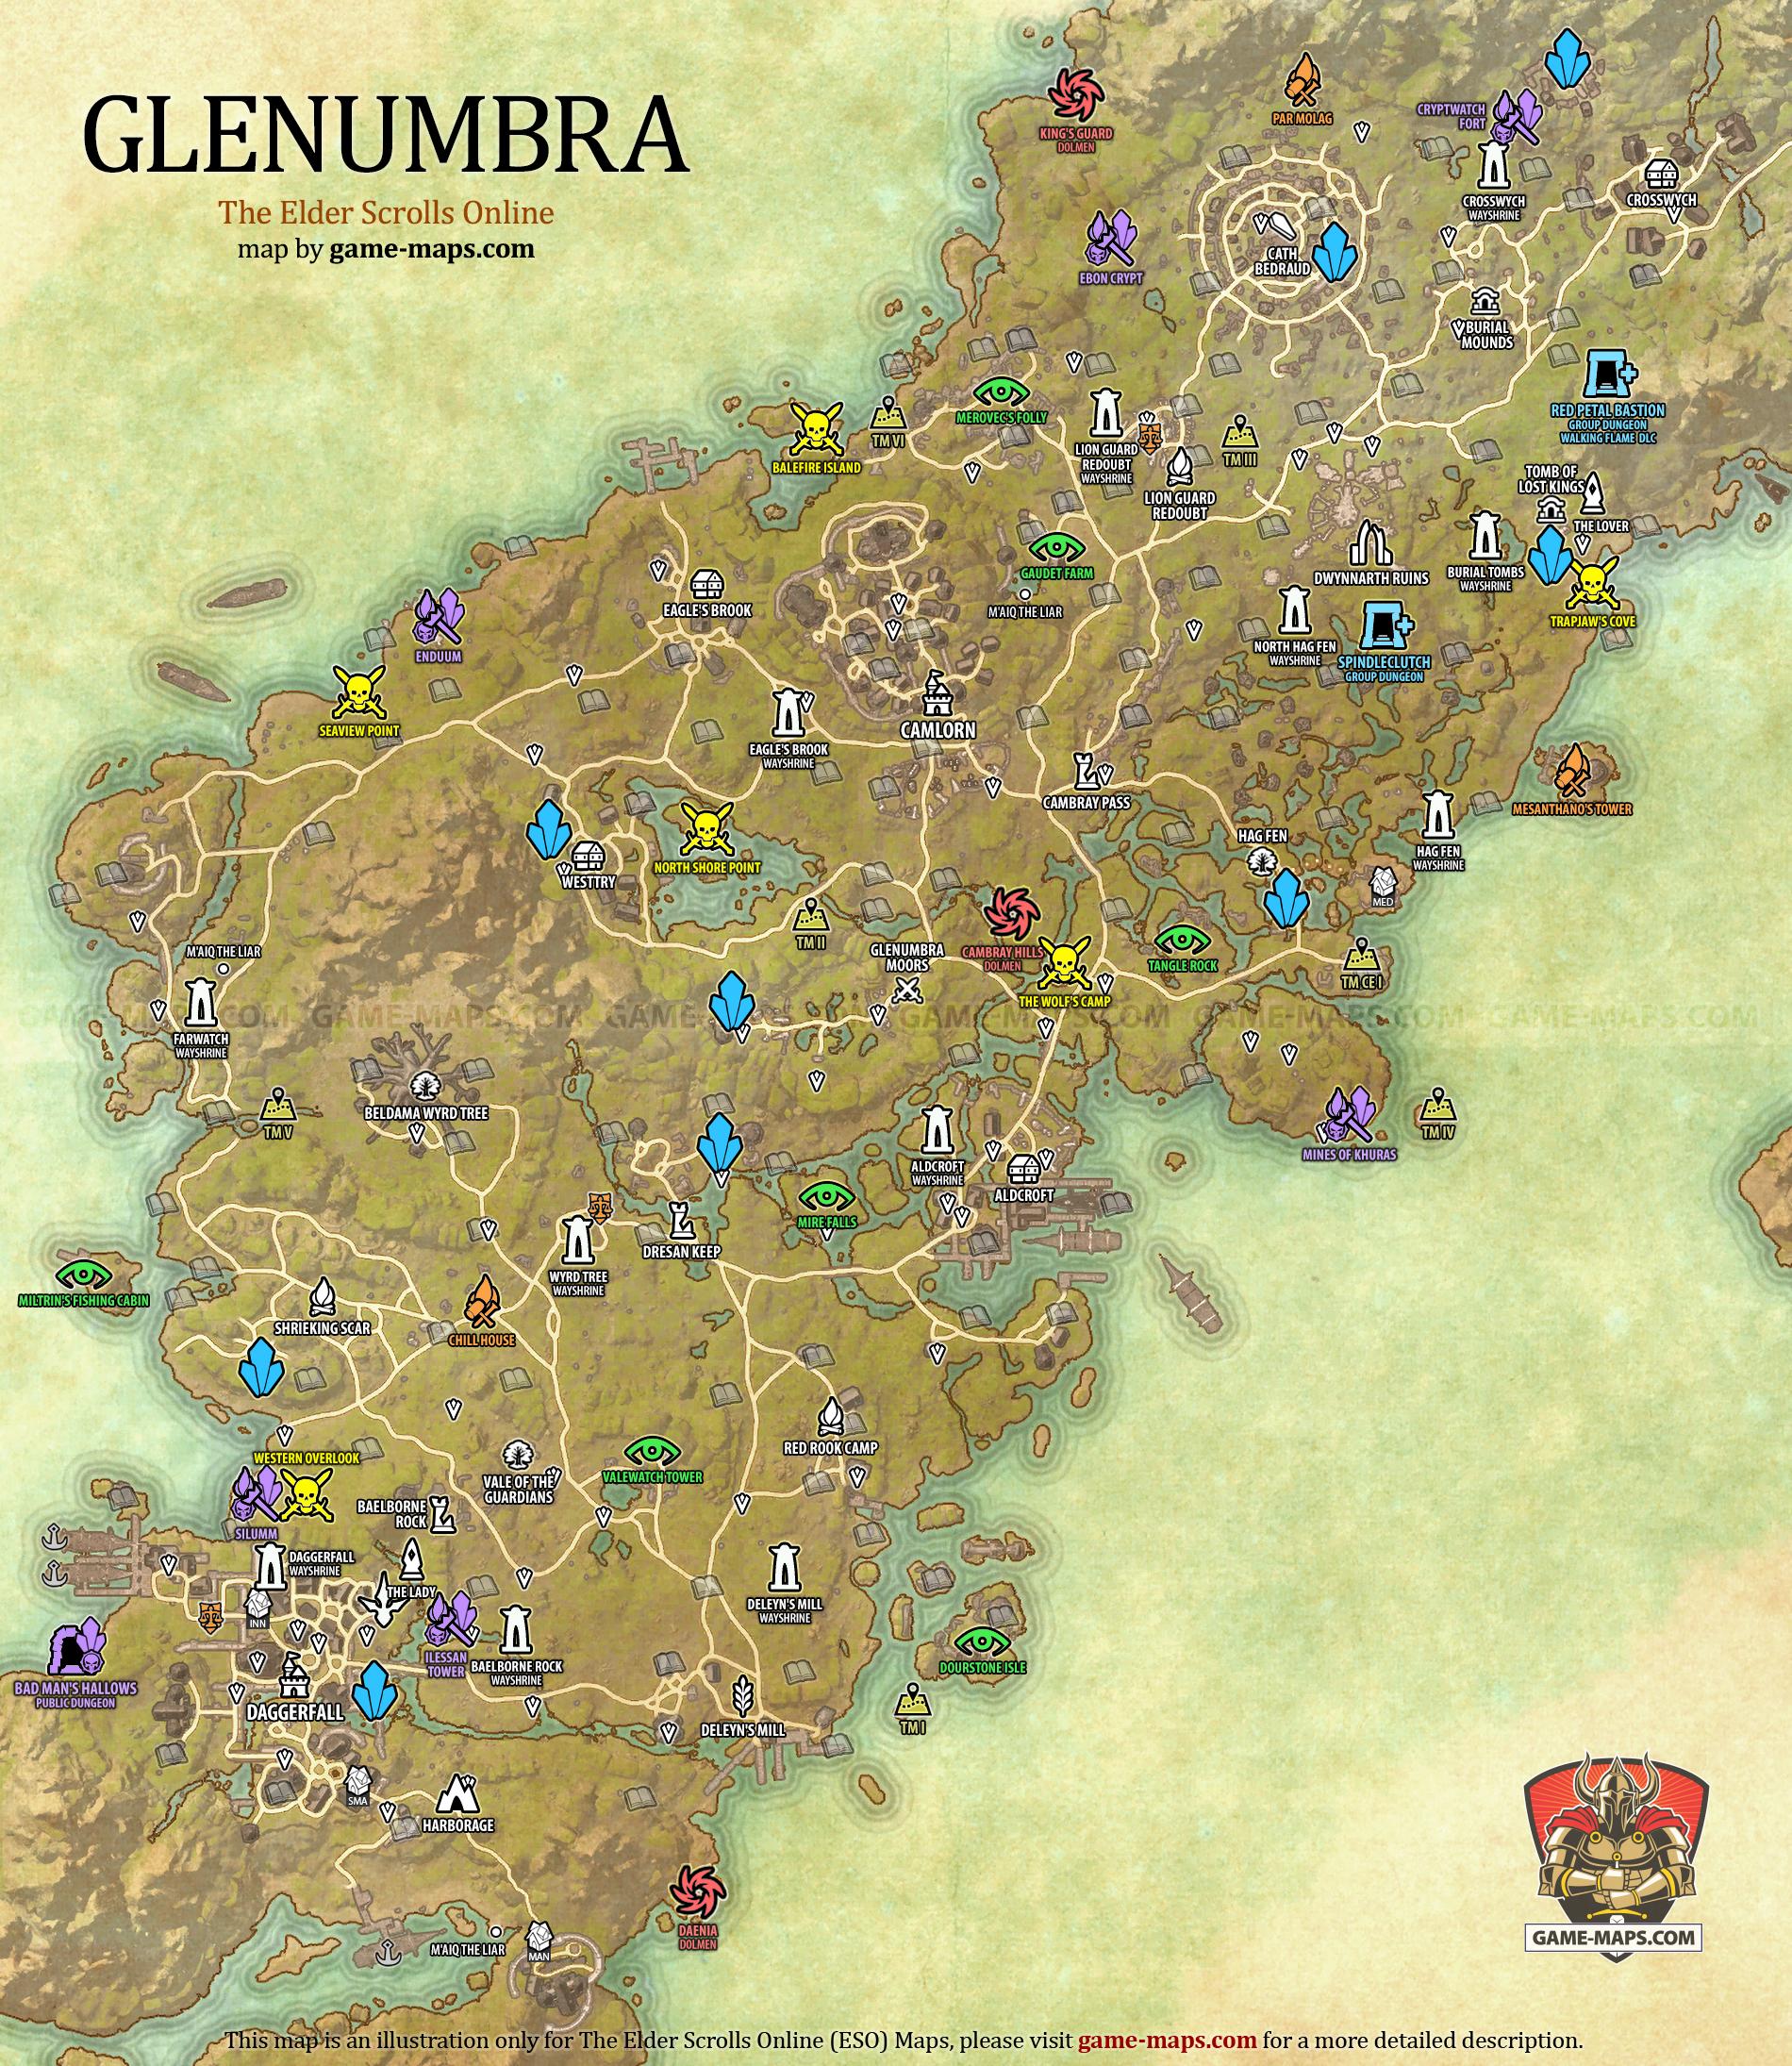 Guggenheim Museum verdict Observation Glenumbra Map - The Elder Scrolls Online (ESO)